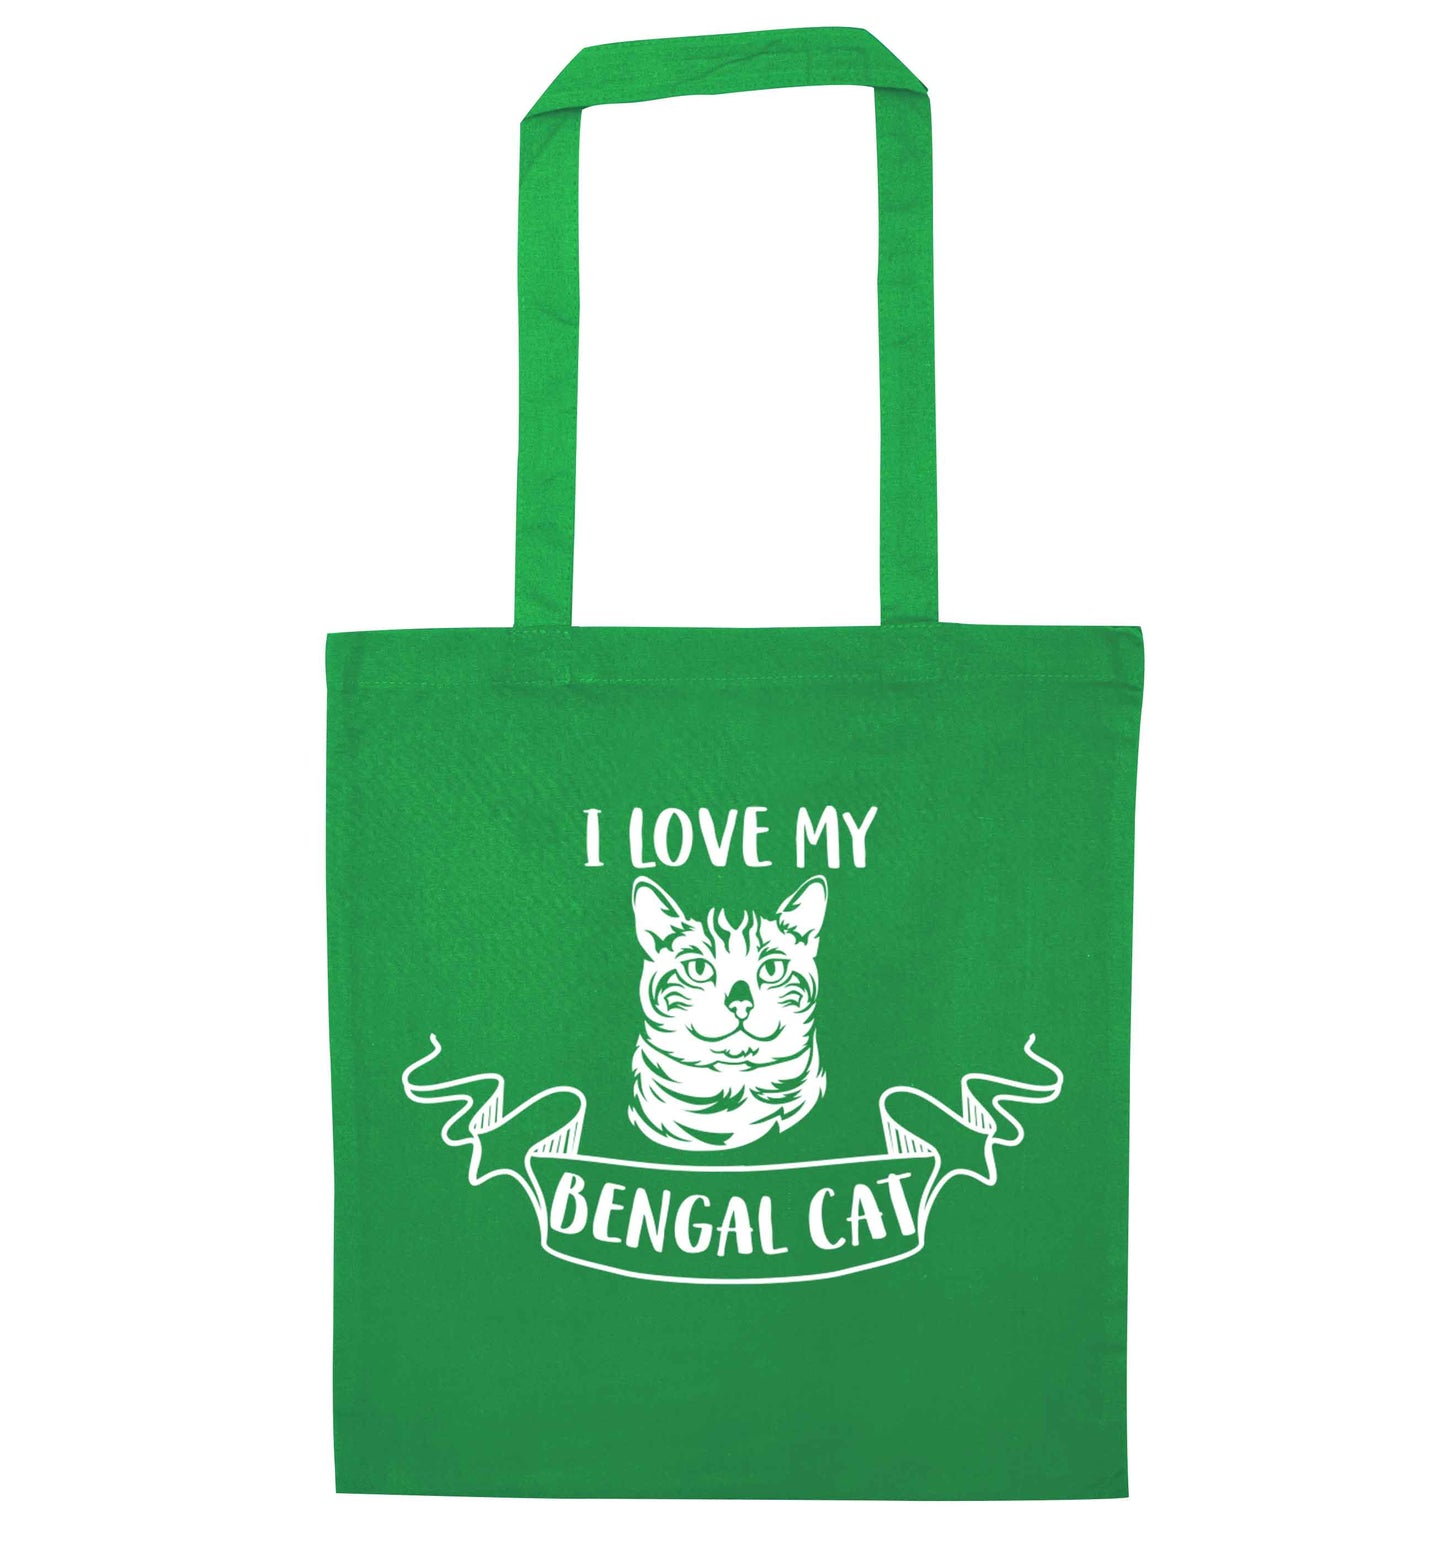 I love my begnal cat green tote bag